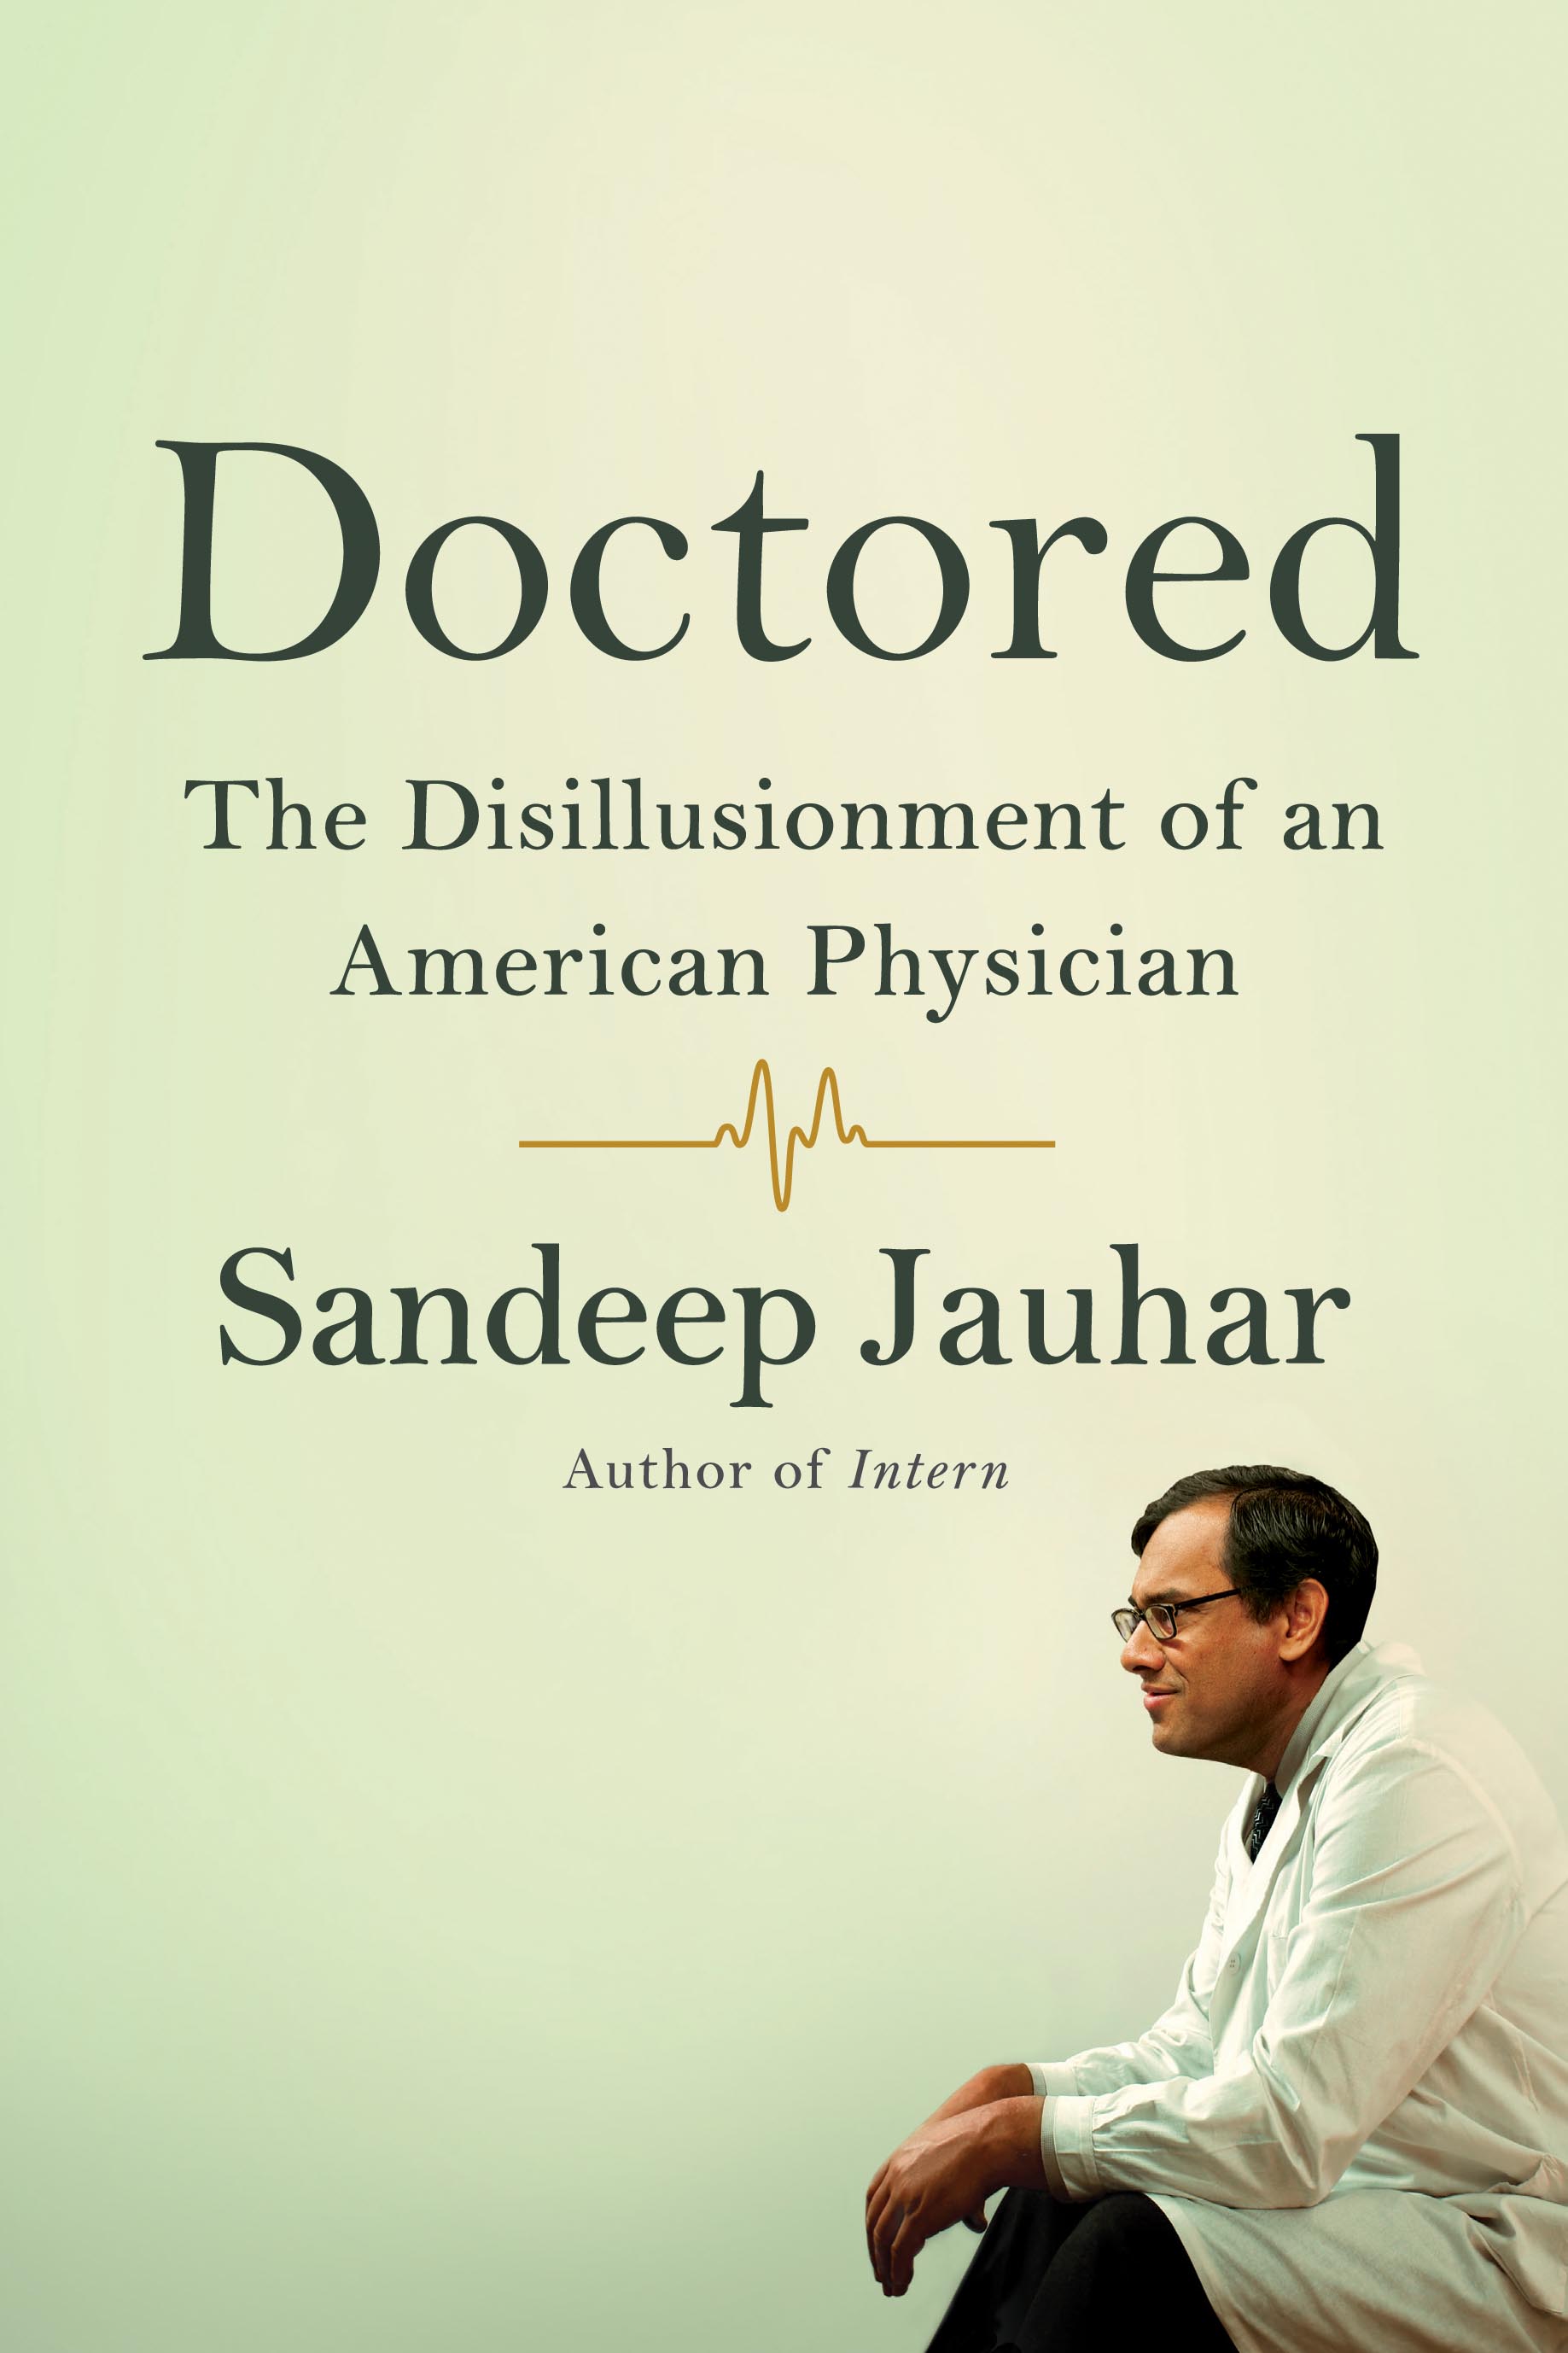 Doctored, by Sandeep Jauhar